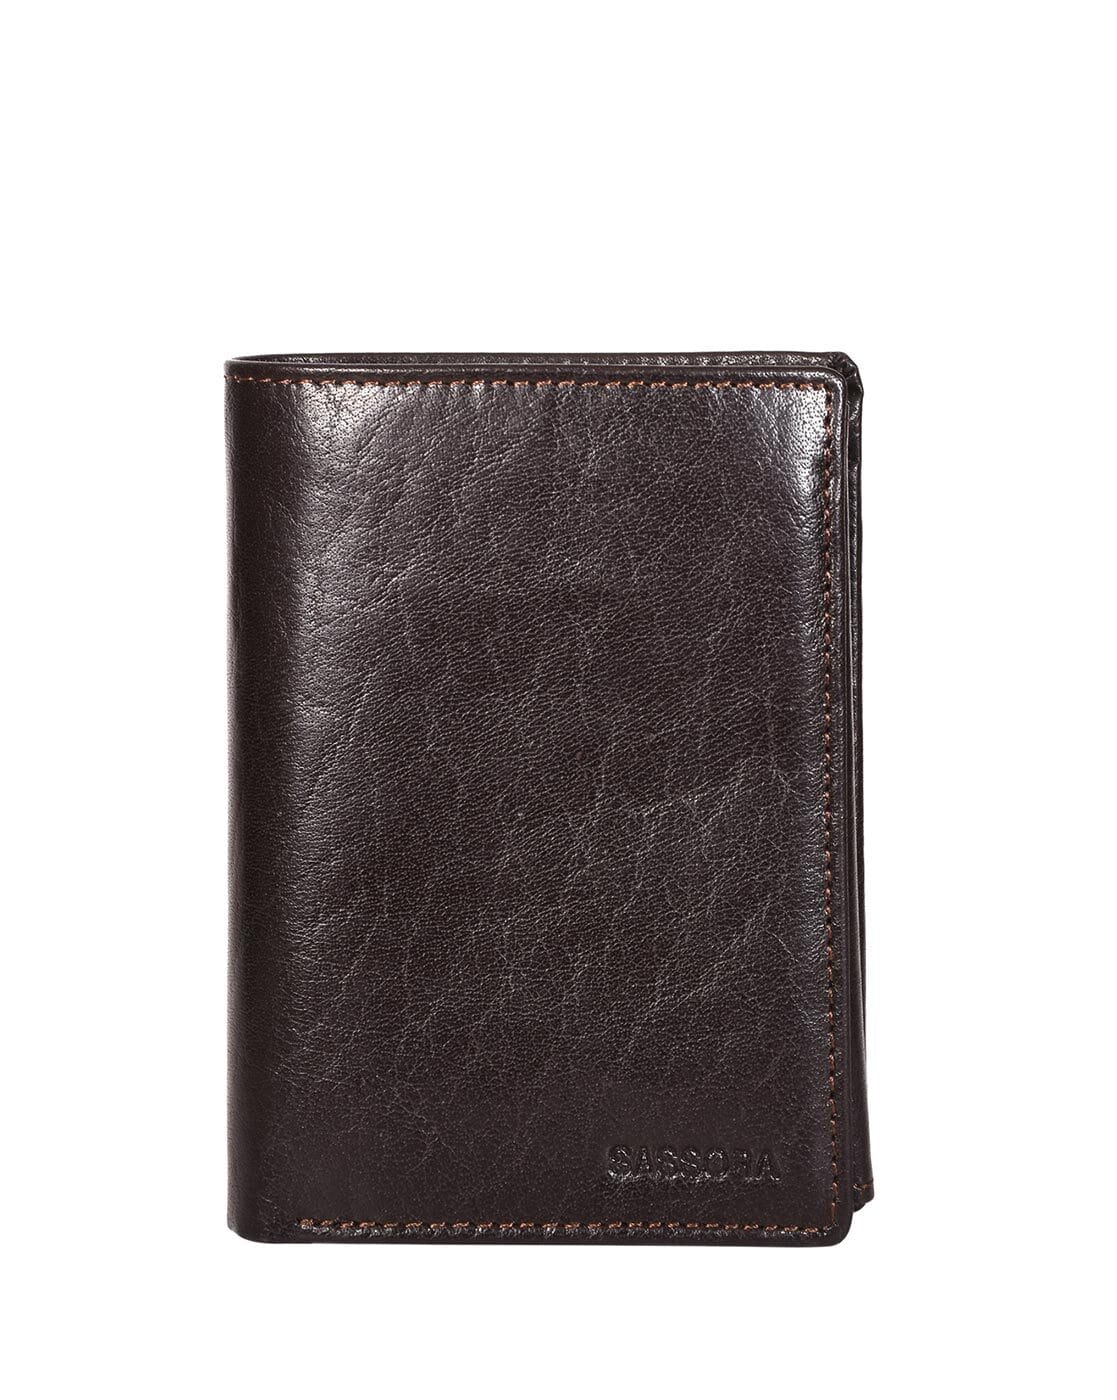 Buy Black 259-2020S Bi-Fold Wallet Online - Hidesign